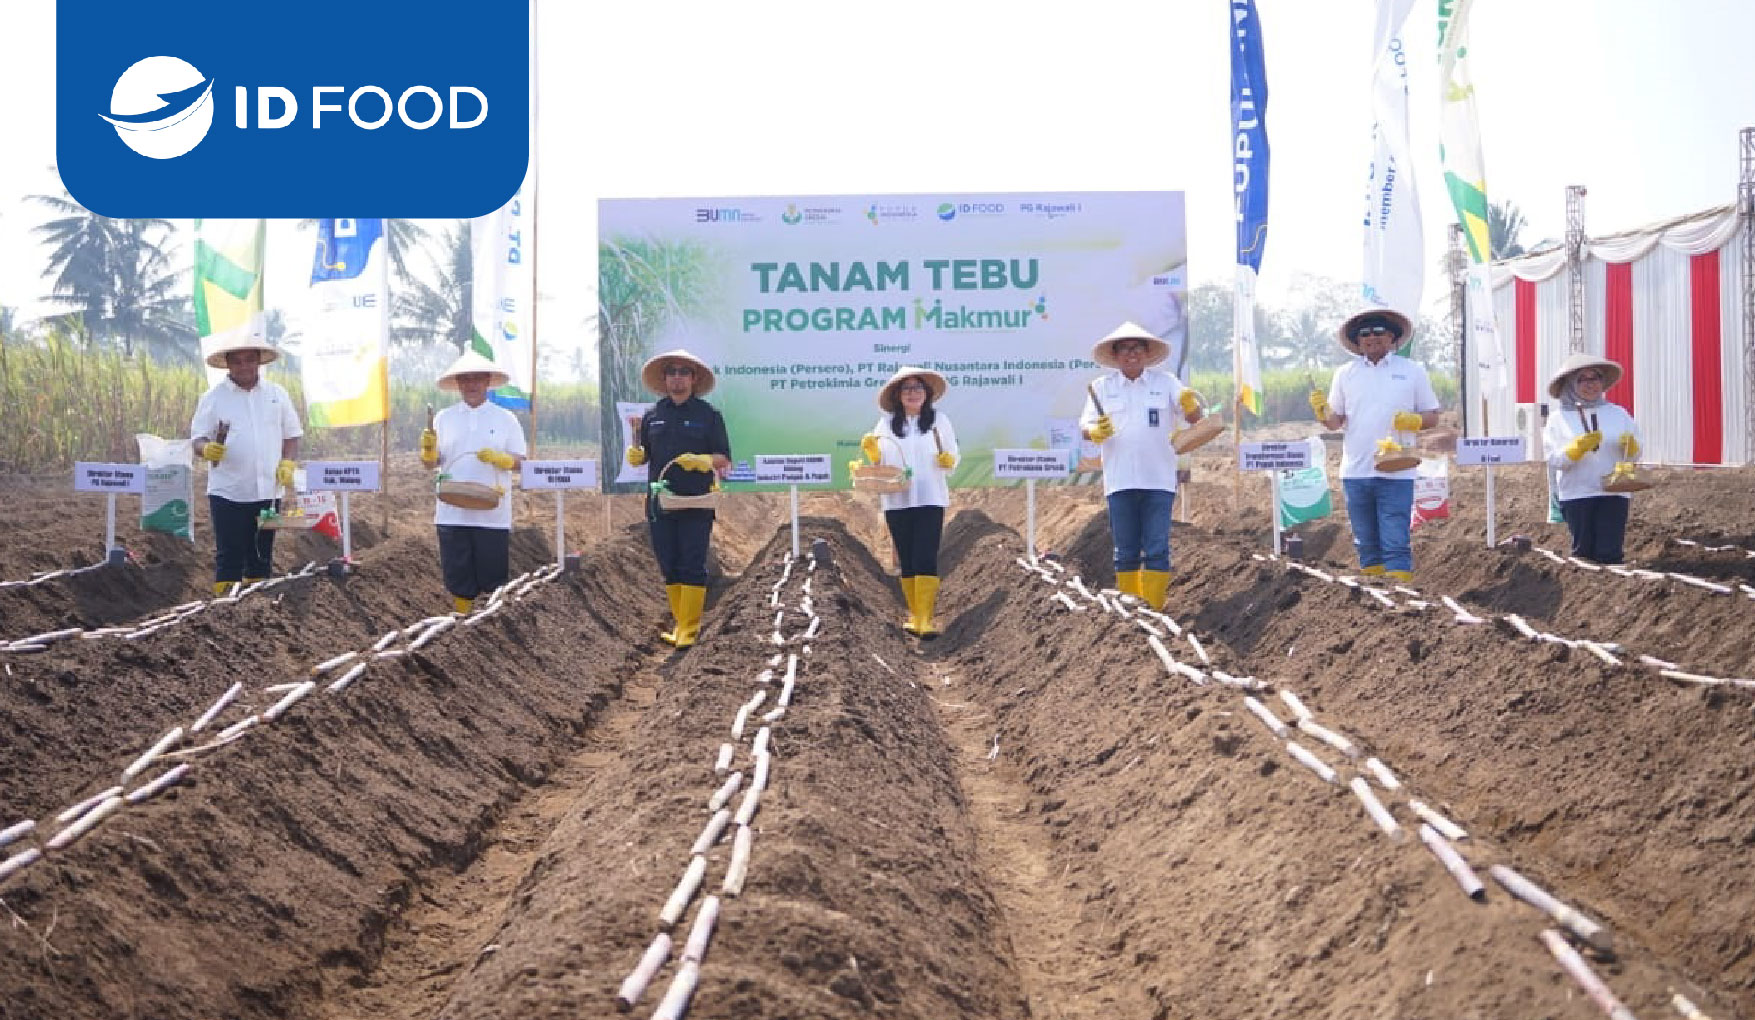 Perkuat Ekosistem Gula Nasional, ID FOOD Bersama Pupuk Indonesia Tingkatkan Produktivitas dan Pendapatan Petani Tebu melalui Makmur